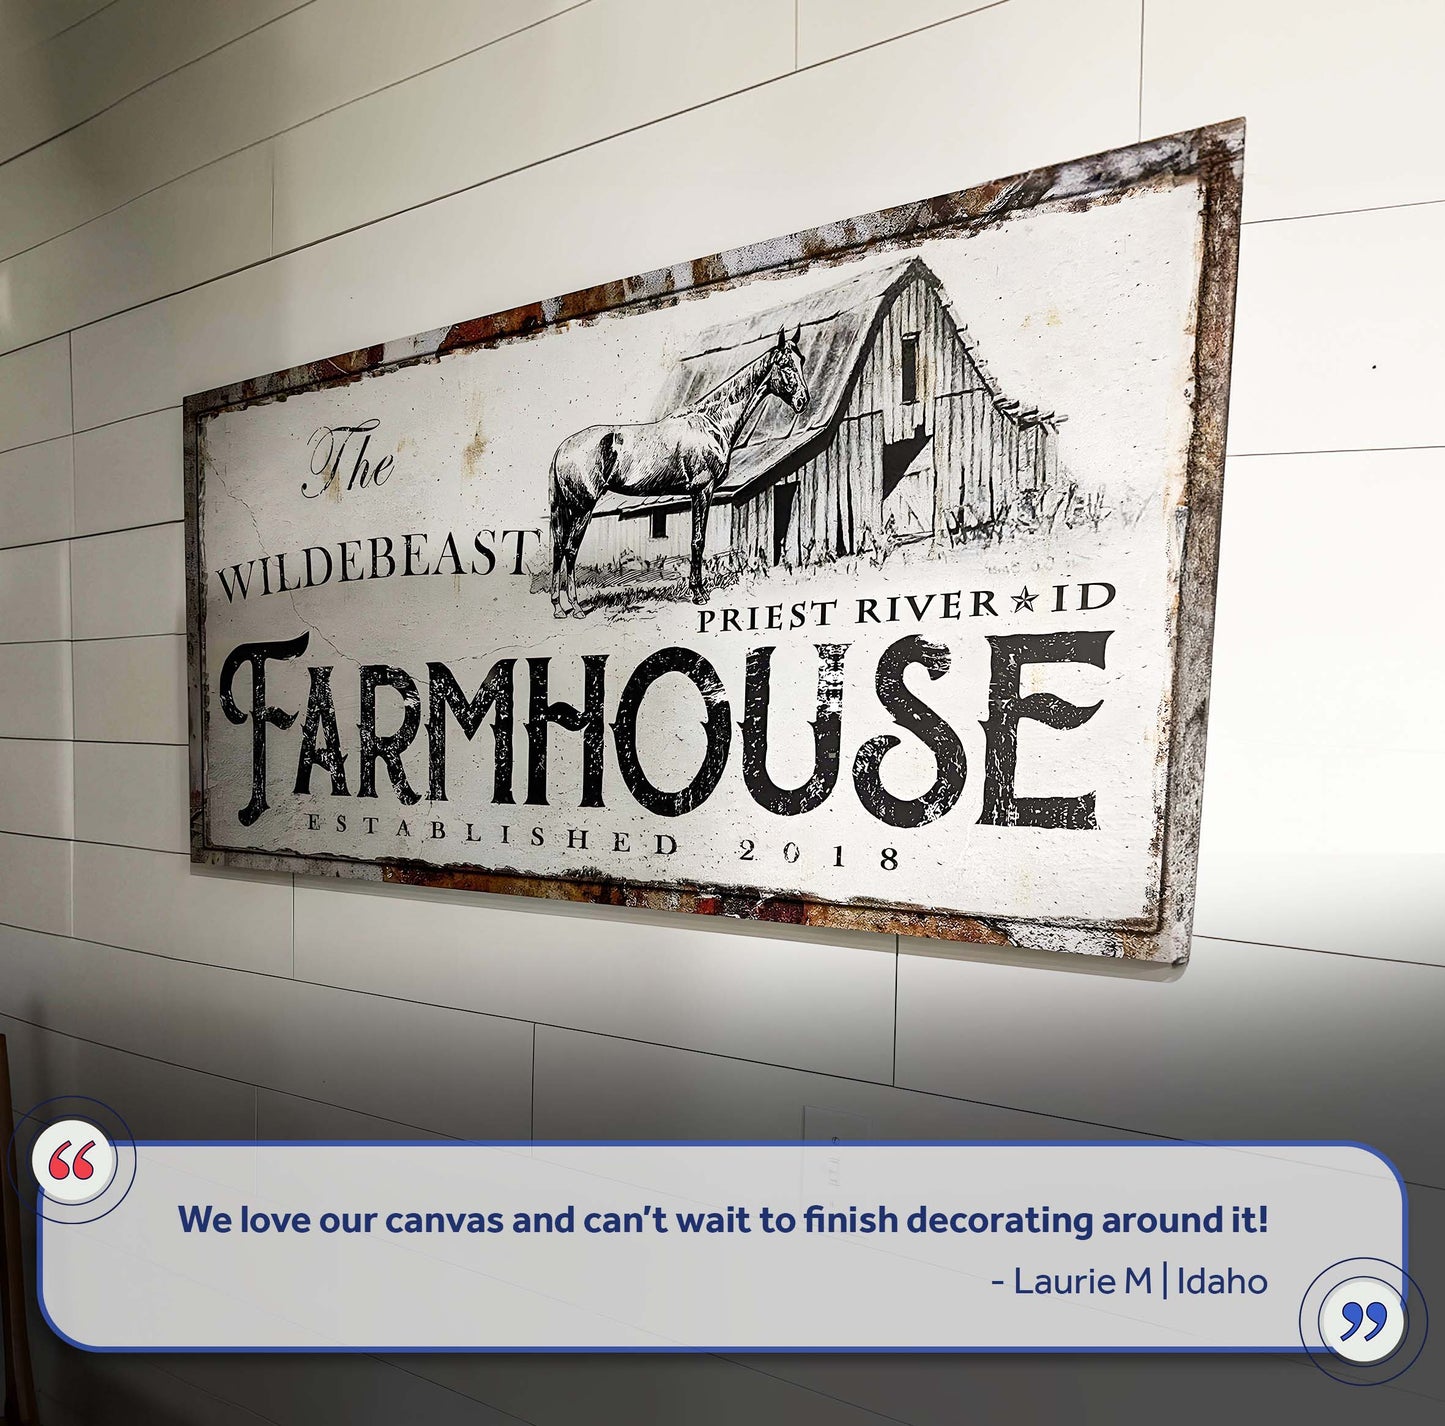 Rustic Horse Farmhouse Sign (Free Shipping)